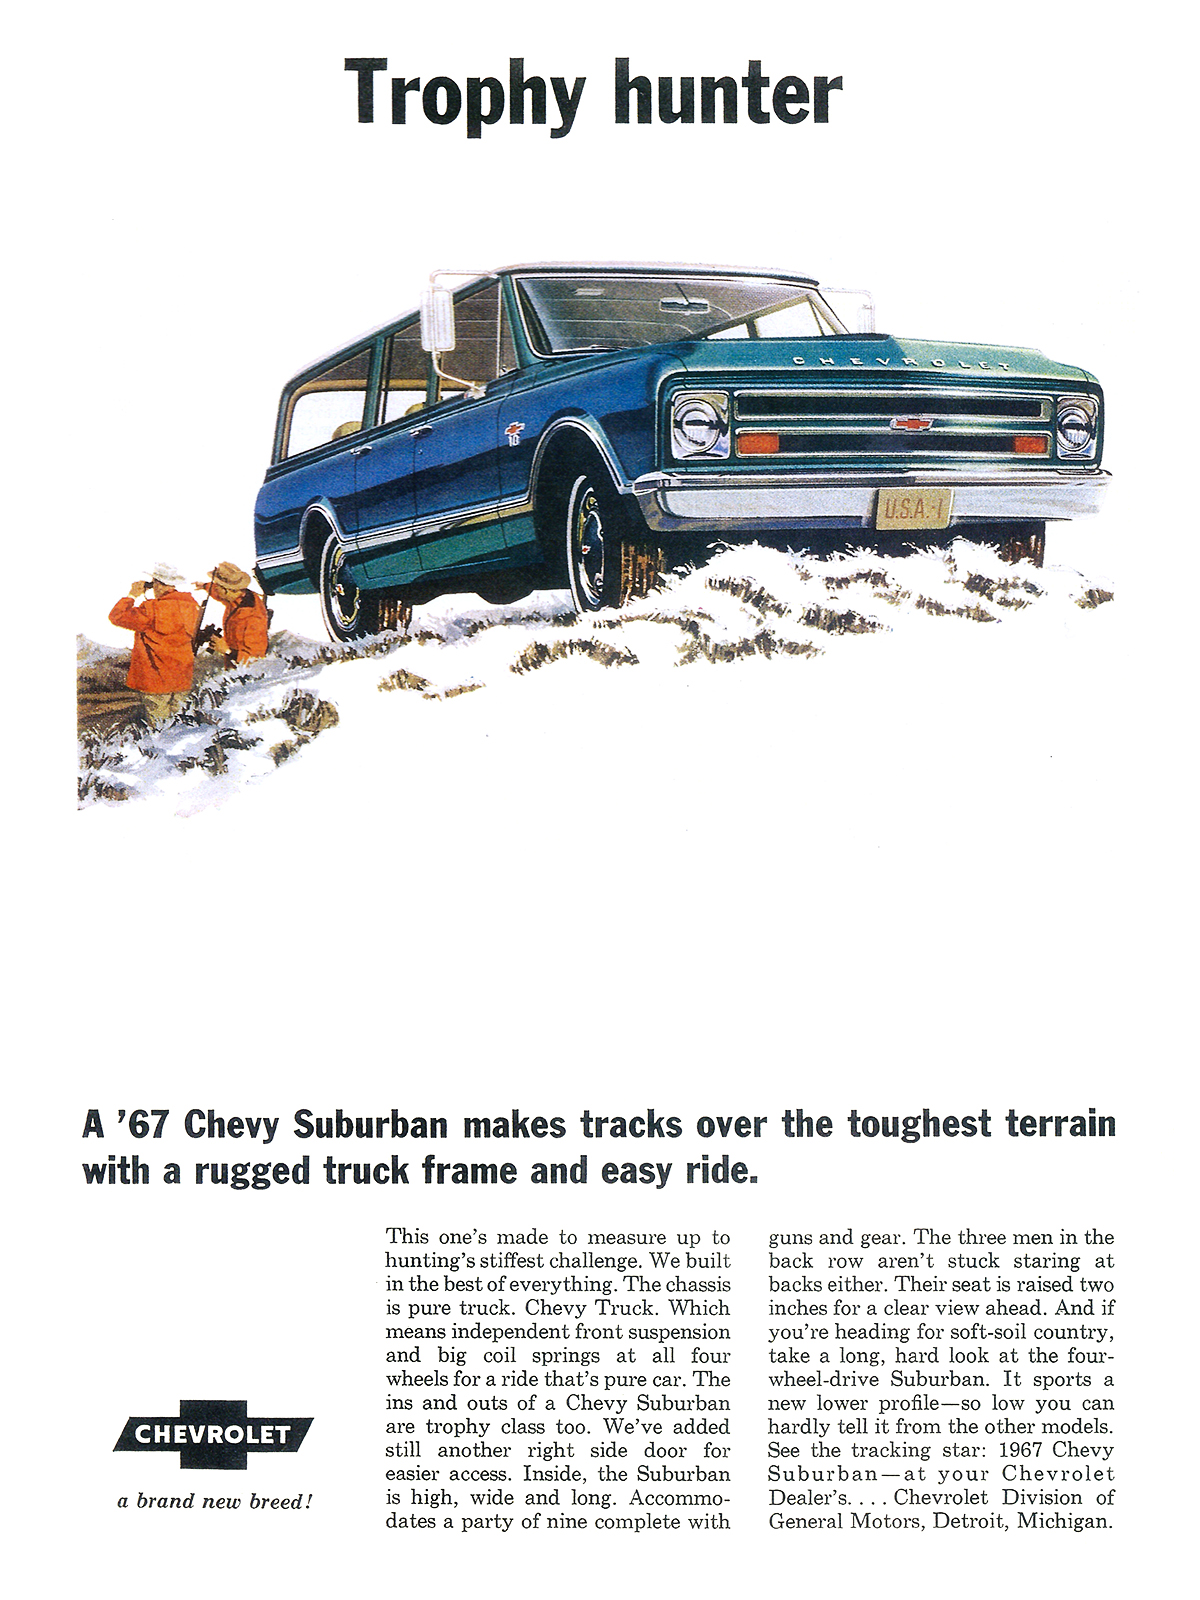 Chevrolet Suburban Ad (1967): Trophy hunter